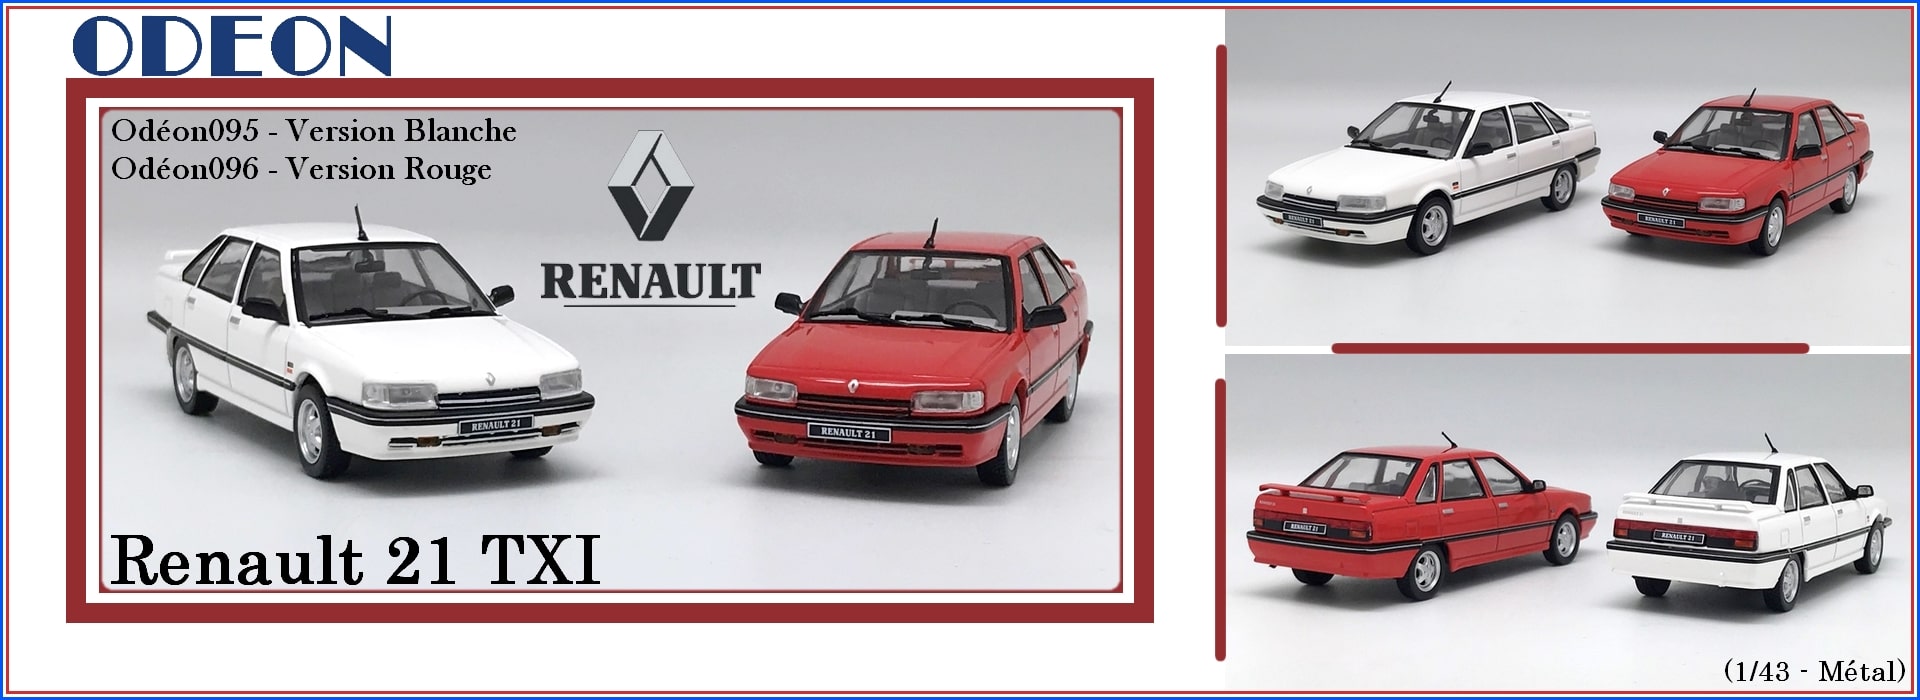 ODEON095 & ODEON096 - Renault 21 TXI 1991 